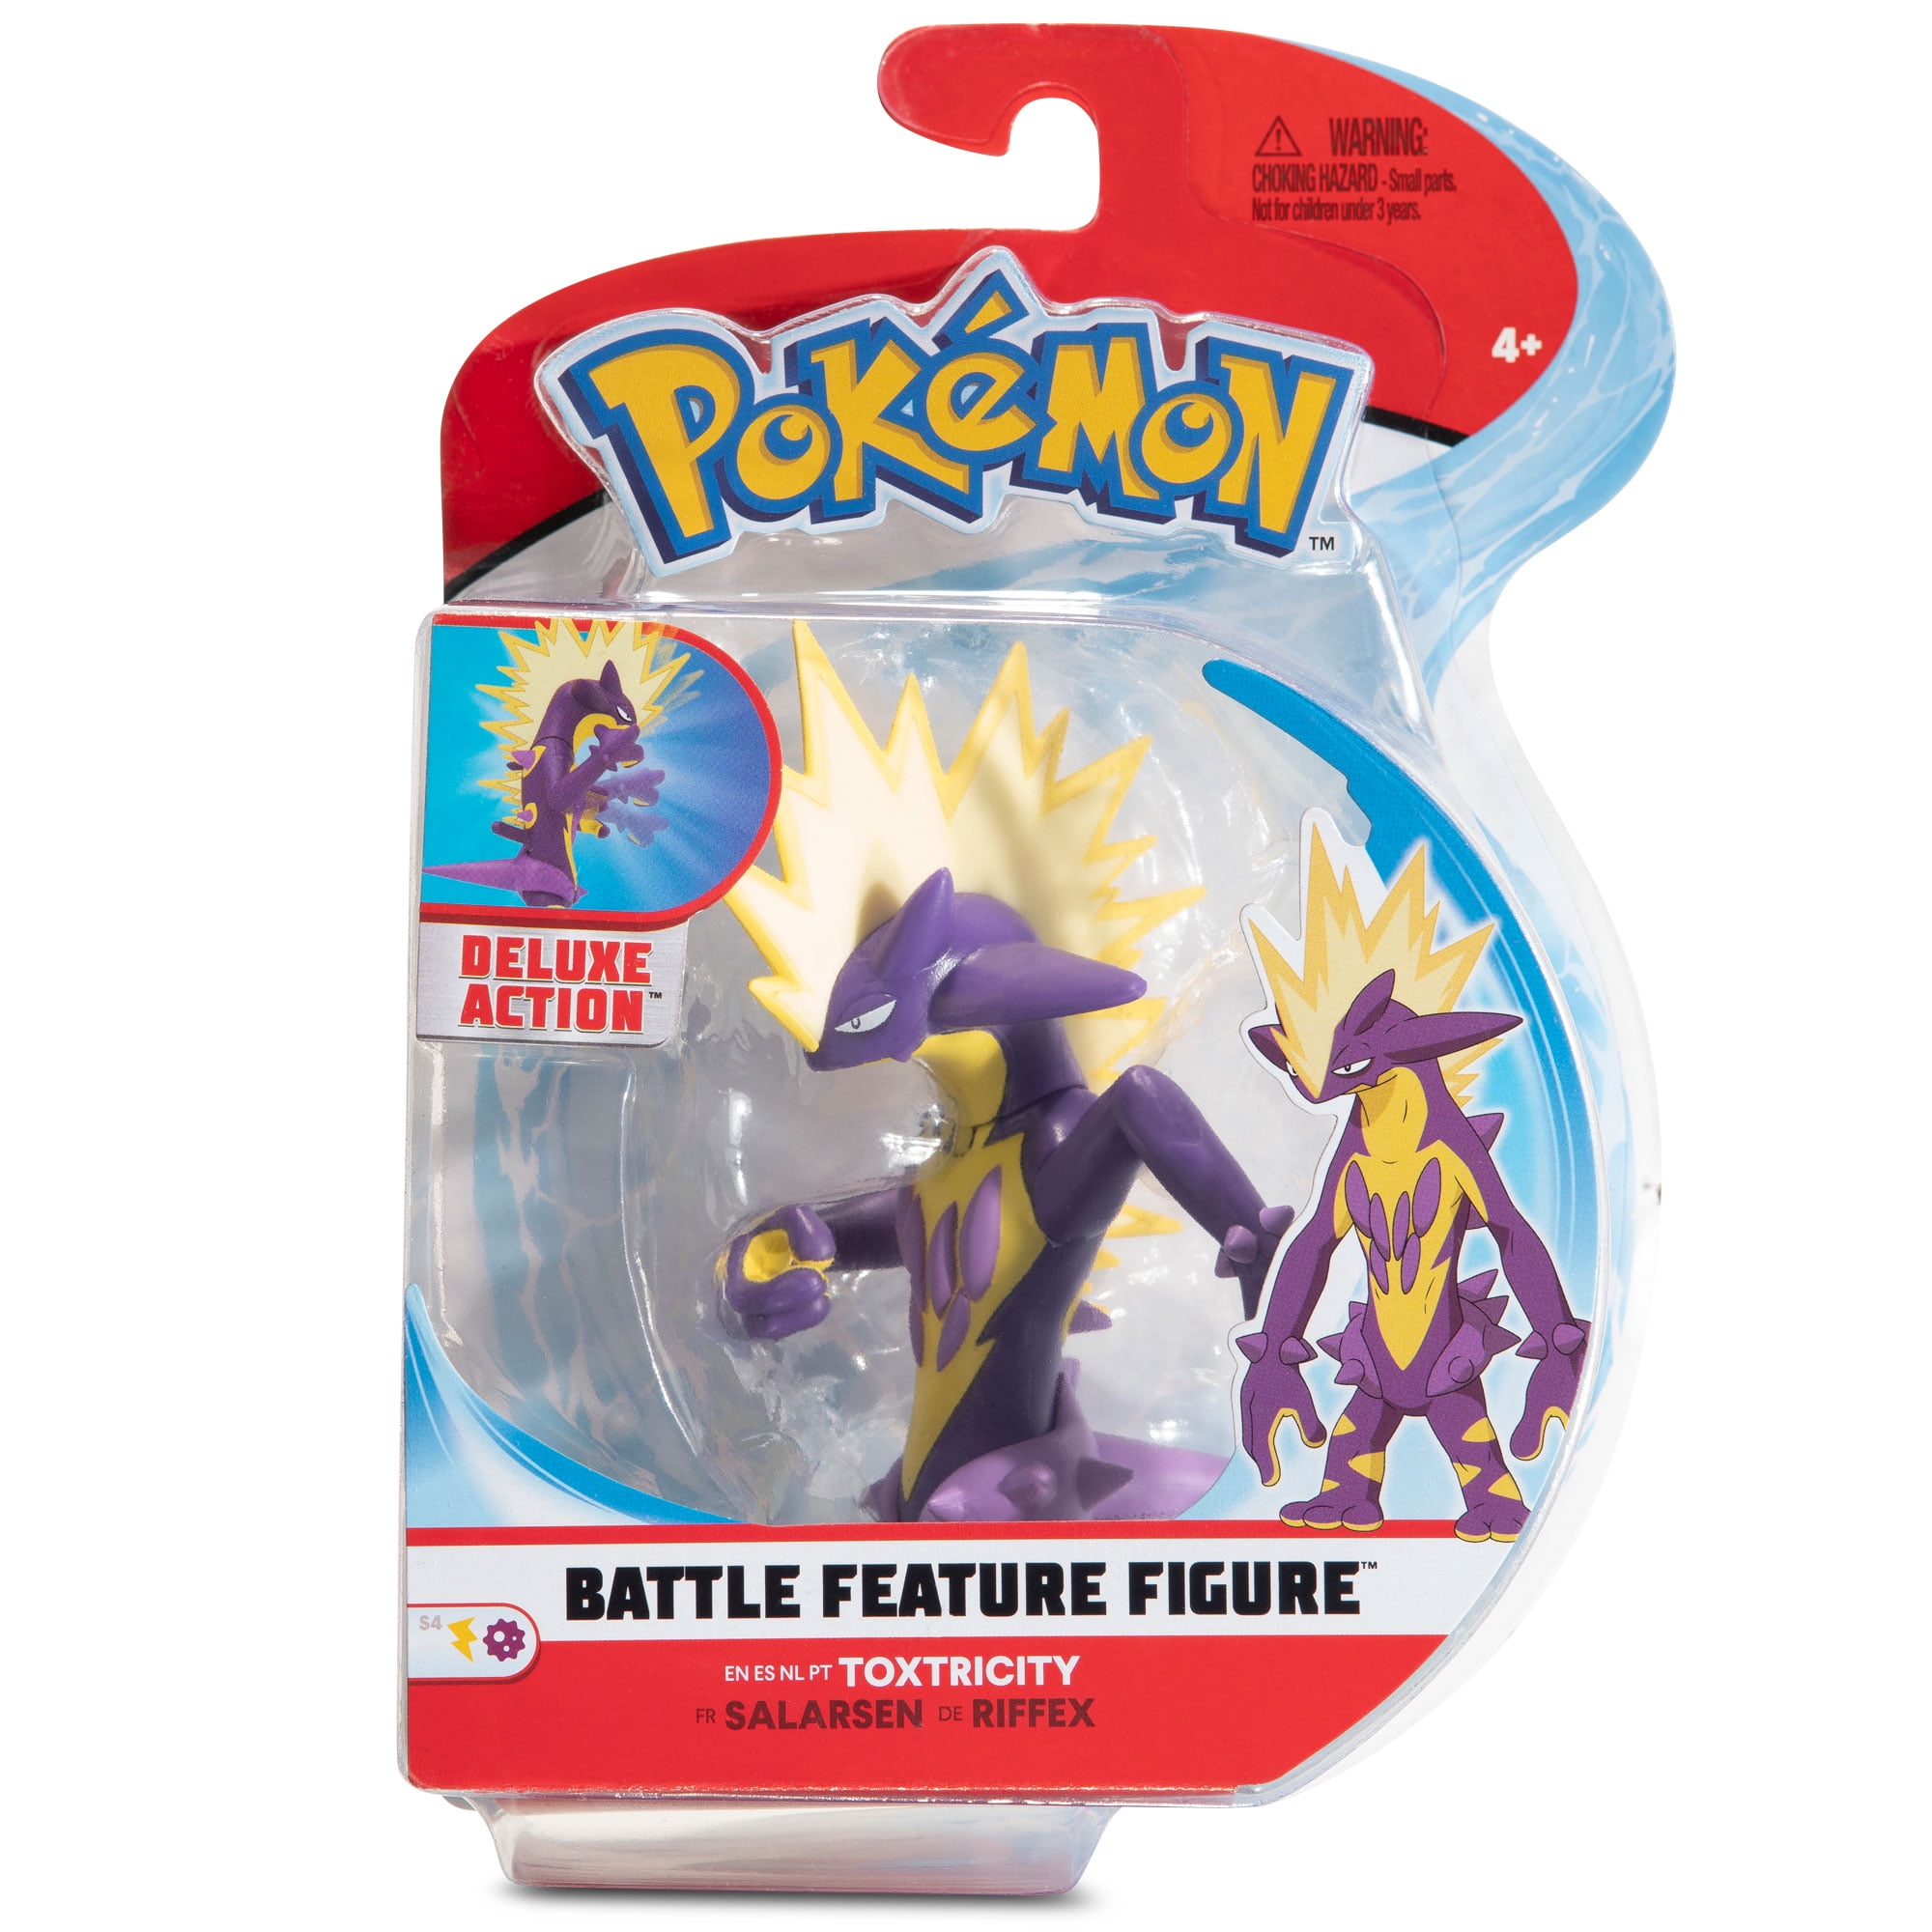 Pokemon Battle Feature Figure Toxtricity Brand New 